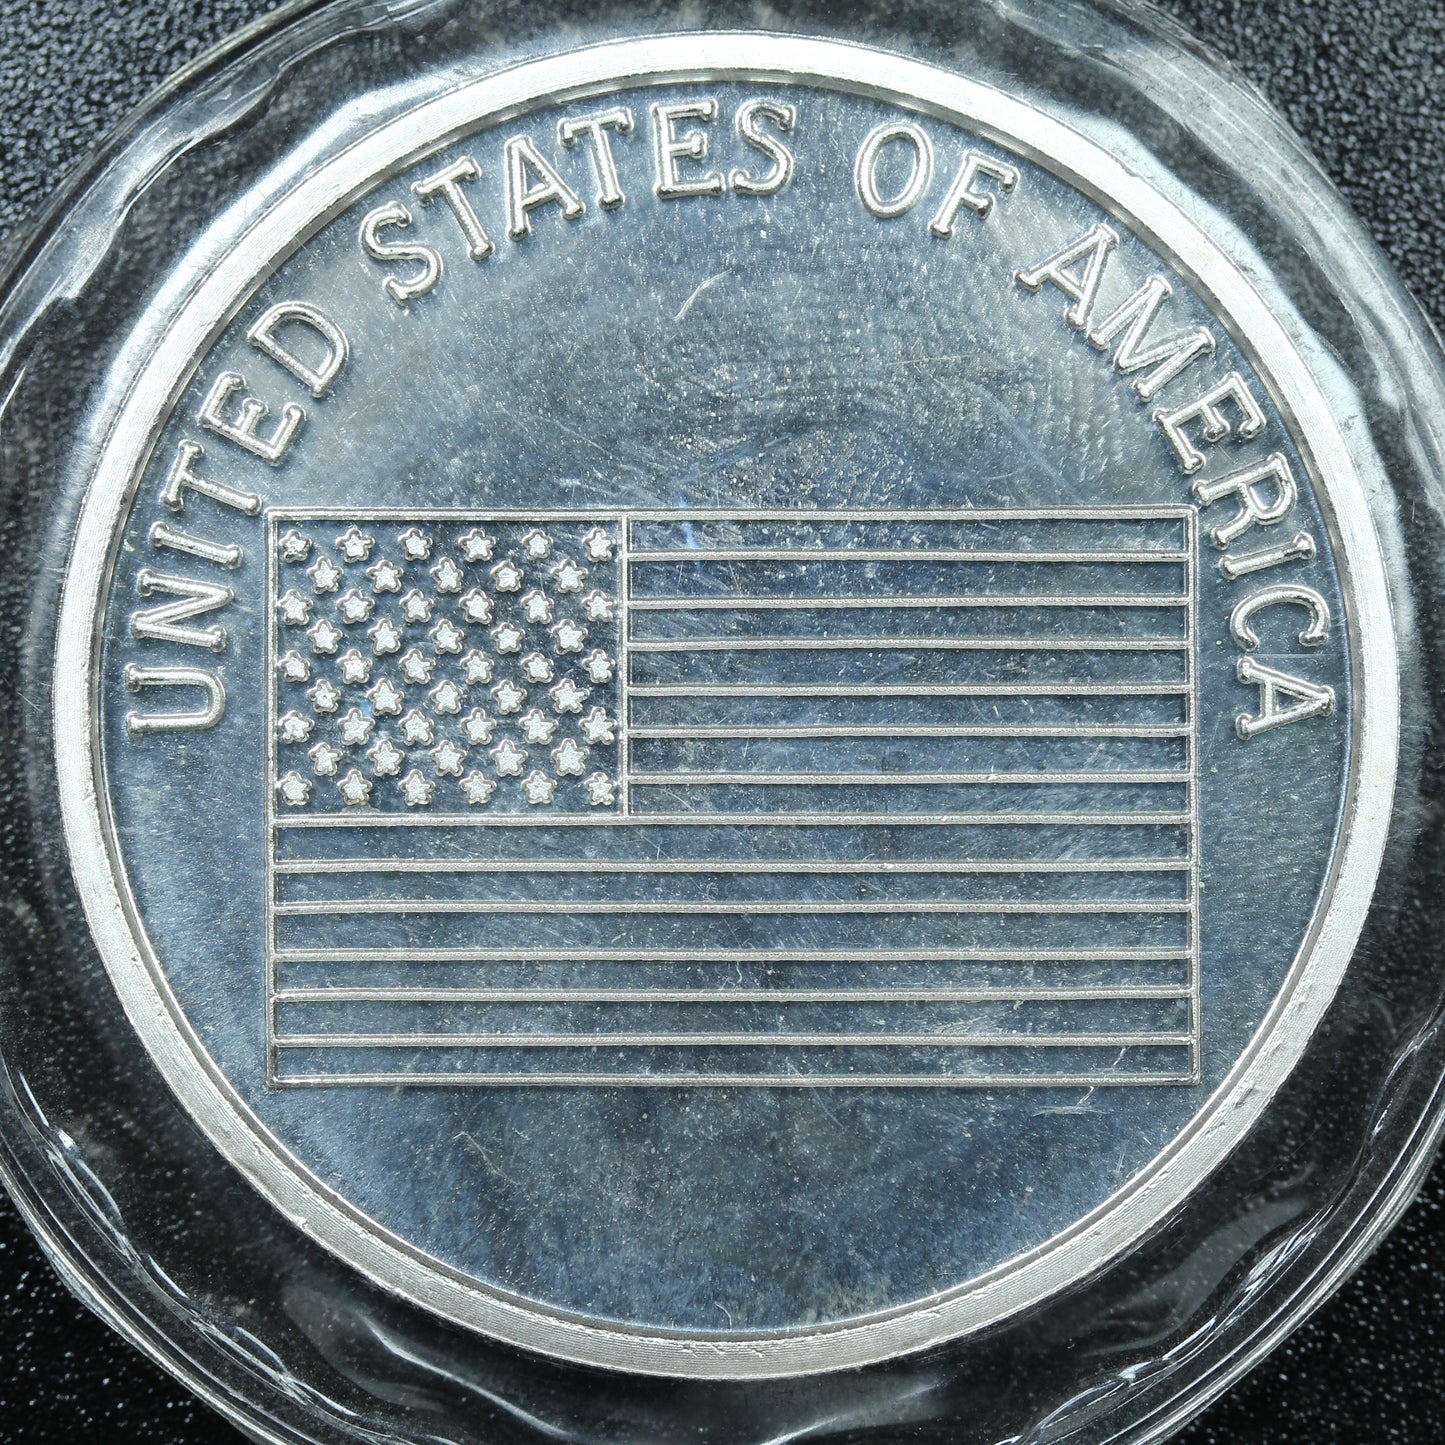 1 oz .999 Fine Silver - United States Flag Engravable Art Round - Sealed